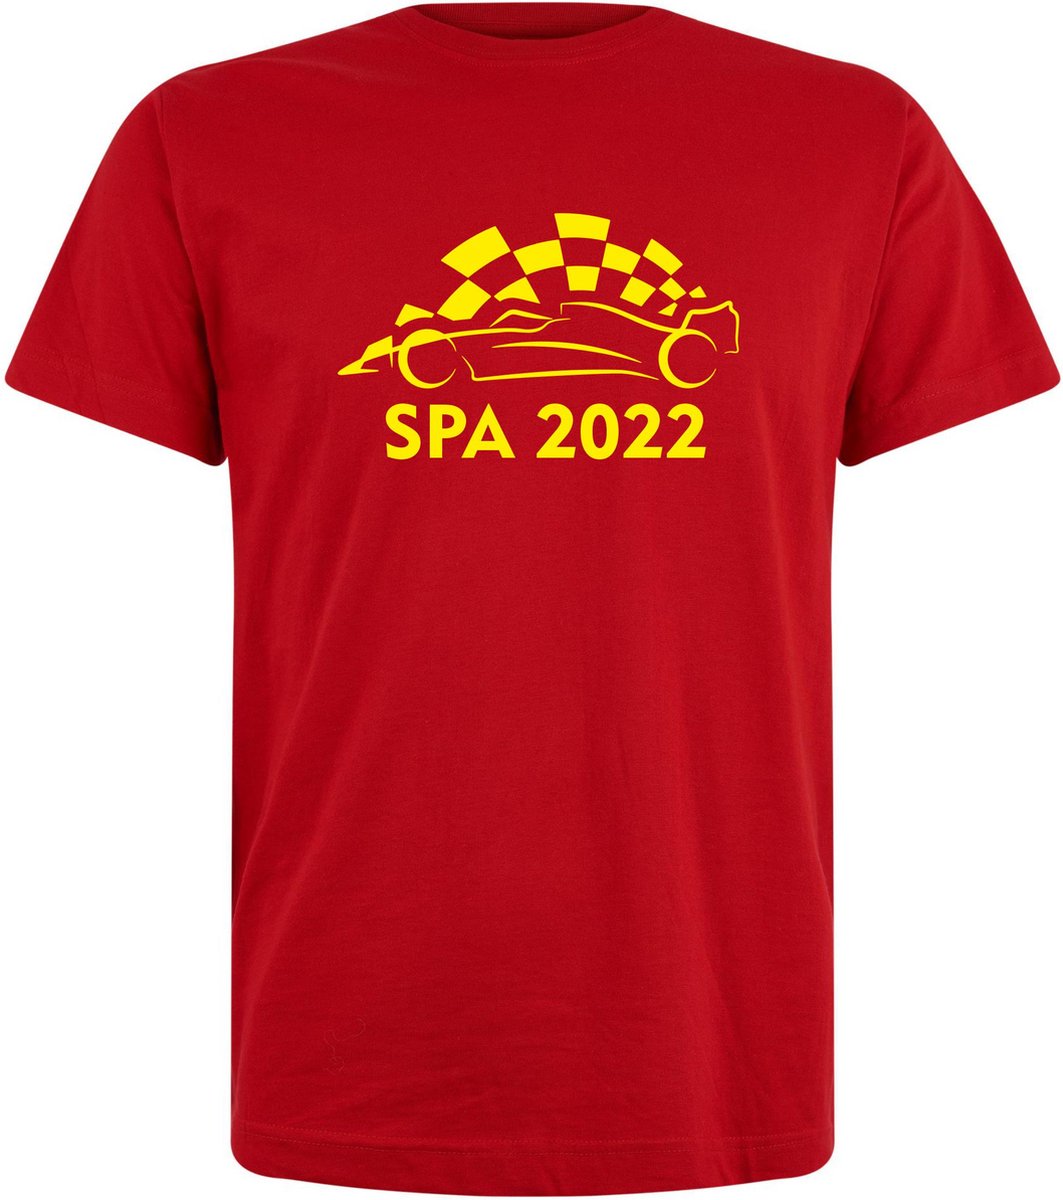 T-shirt Spa 2022 met raceauto | Max Verstappen / Red Bull Racing / Formule 1 fan | Grand Prix Circuit Spa-Francorchamps | kleding shirt | Rood | maat XS